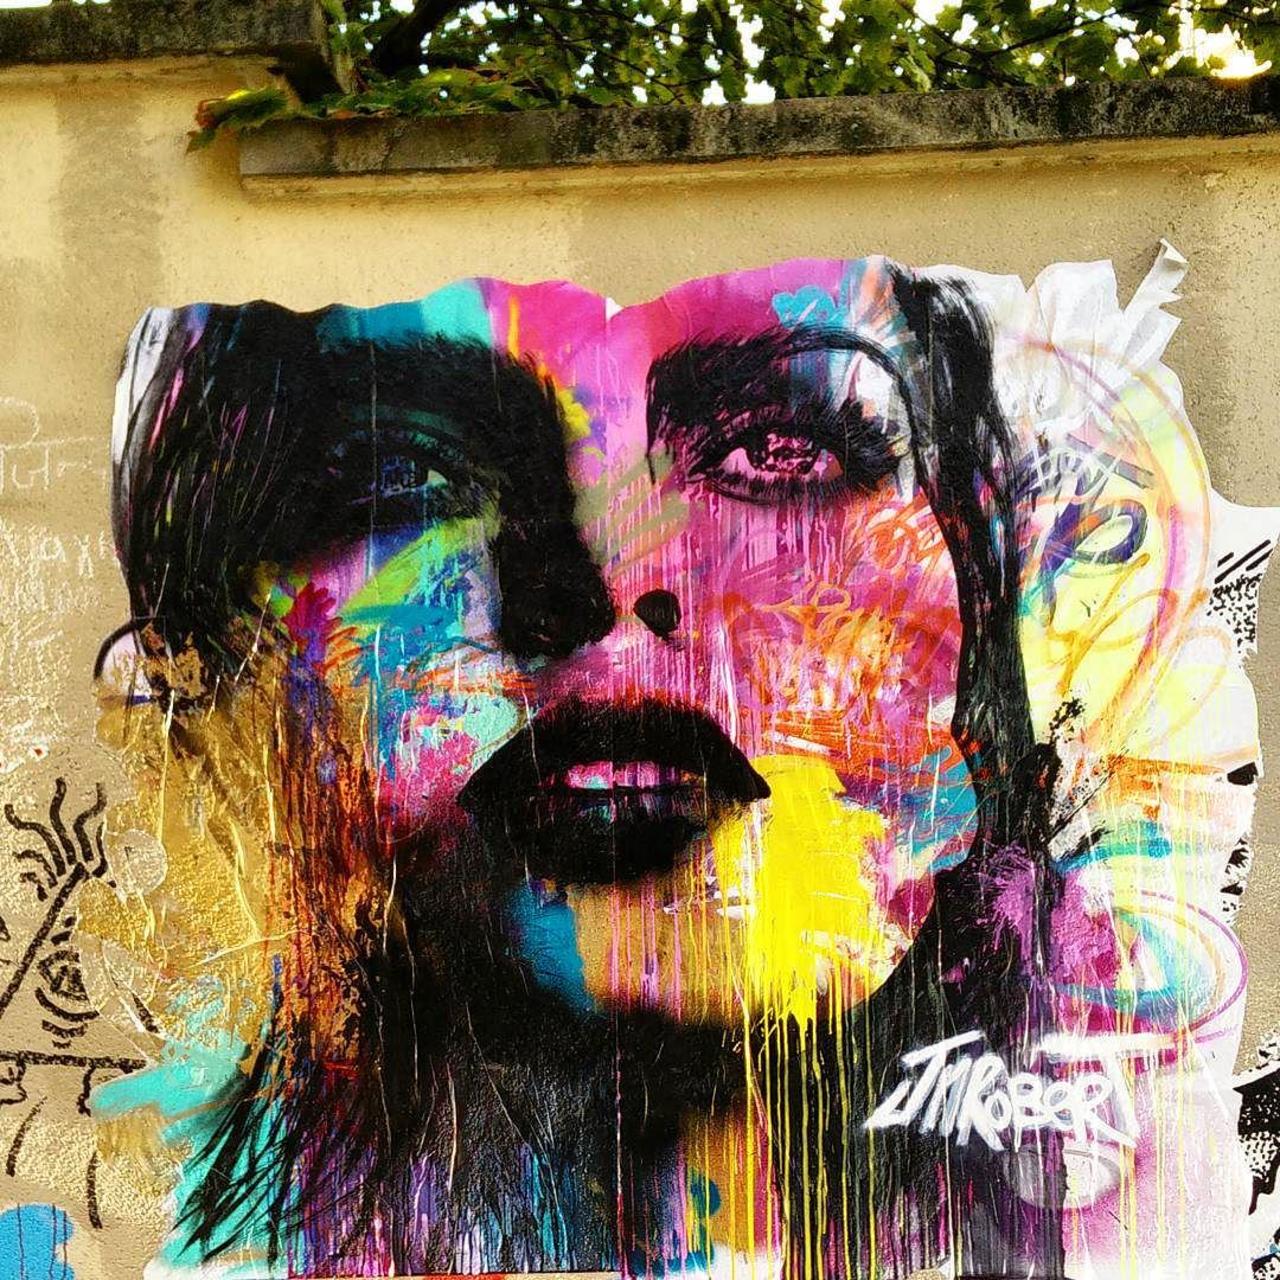 circumjacent_fr: #Paris #graffiti photo by ceky_art http://ift.tt/1jrO7k0 #StreetArt http://t.co/SWswKkwUeA